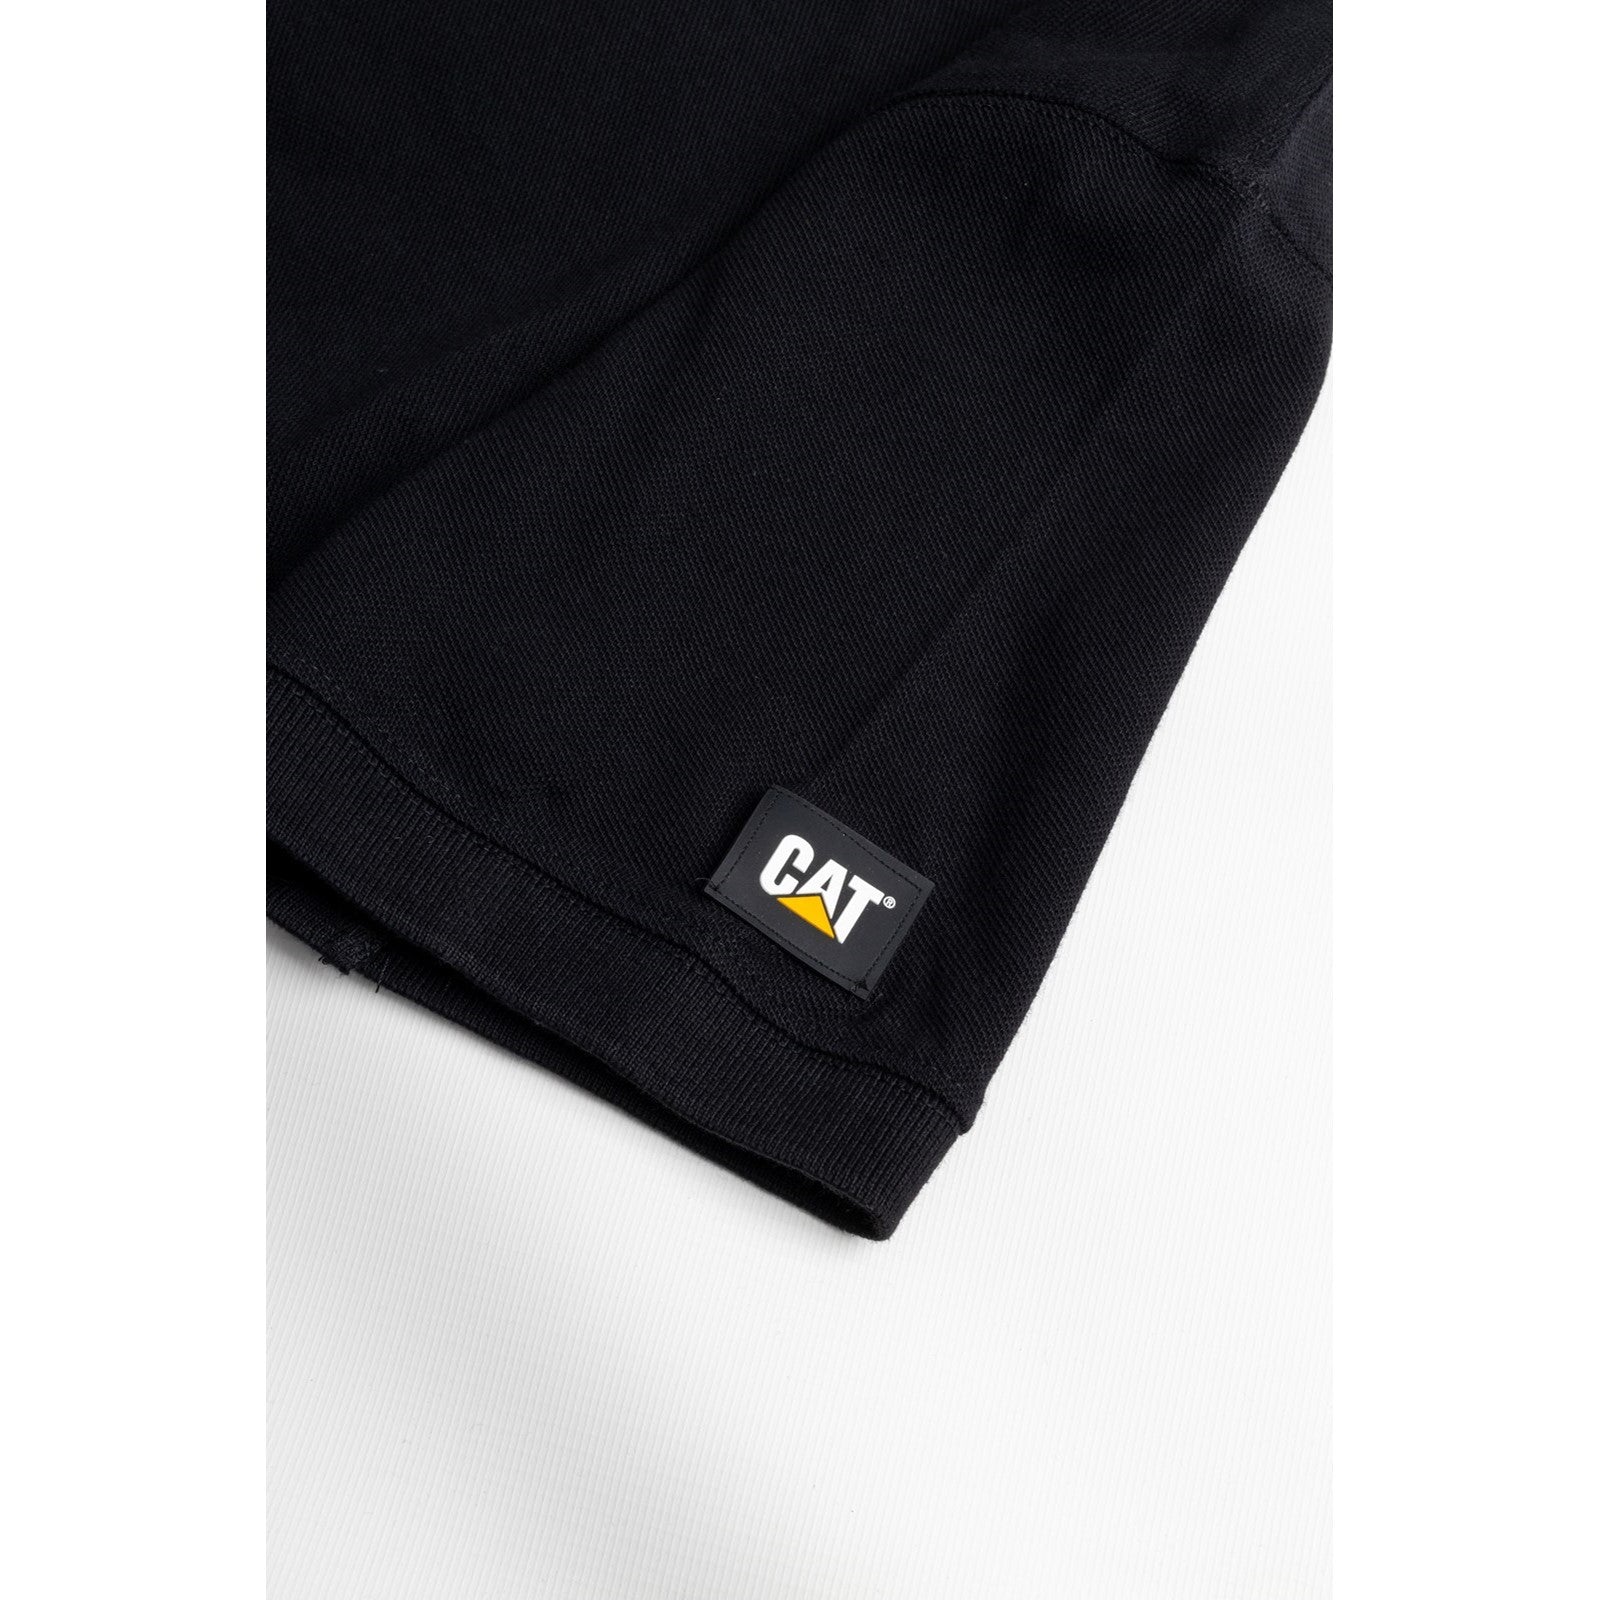 Caterpillar Essentials Polo Shirt. Black. Sleeve 